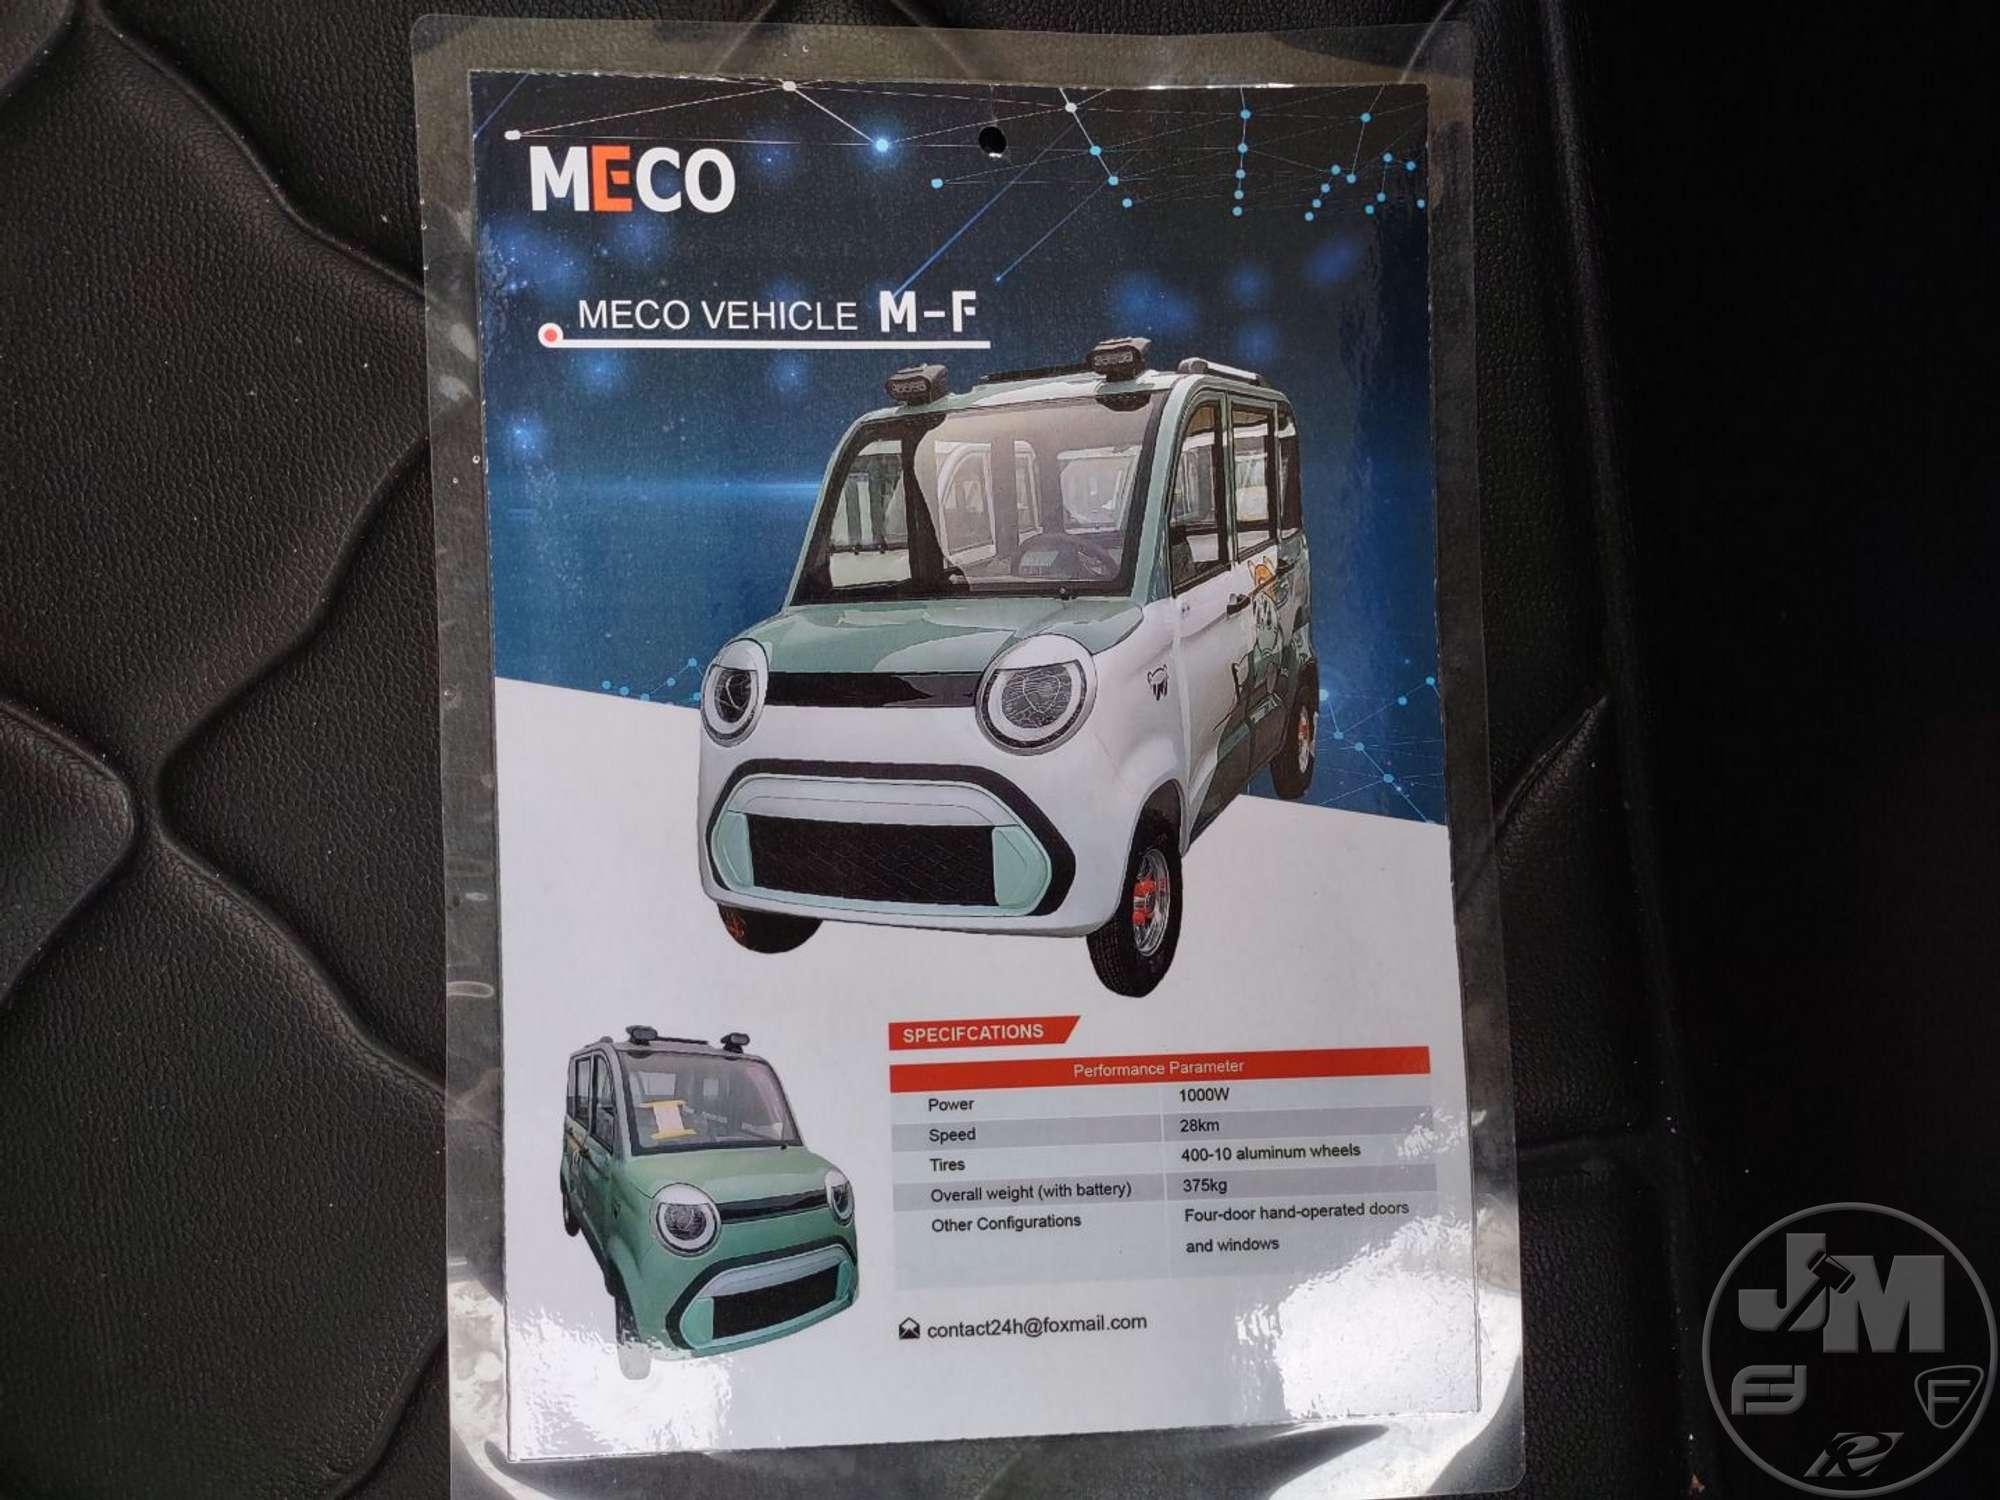 2024 MECO M-F VIN: M-F240209 2WD